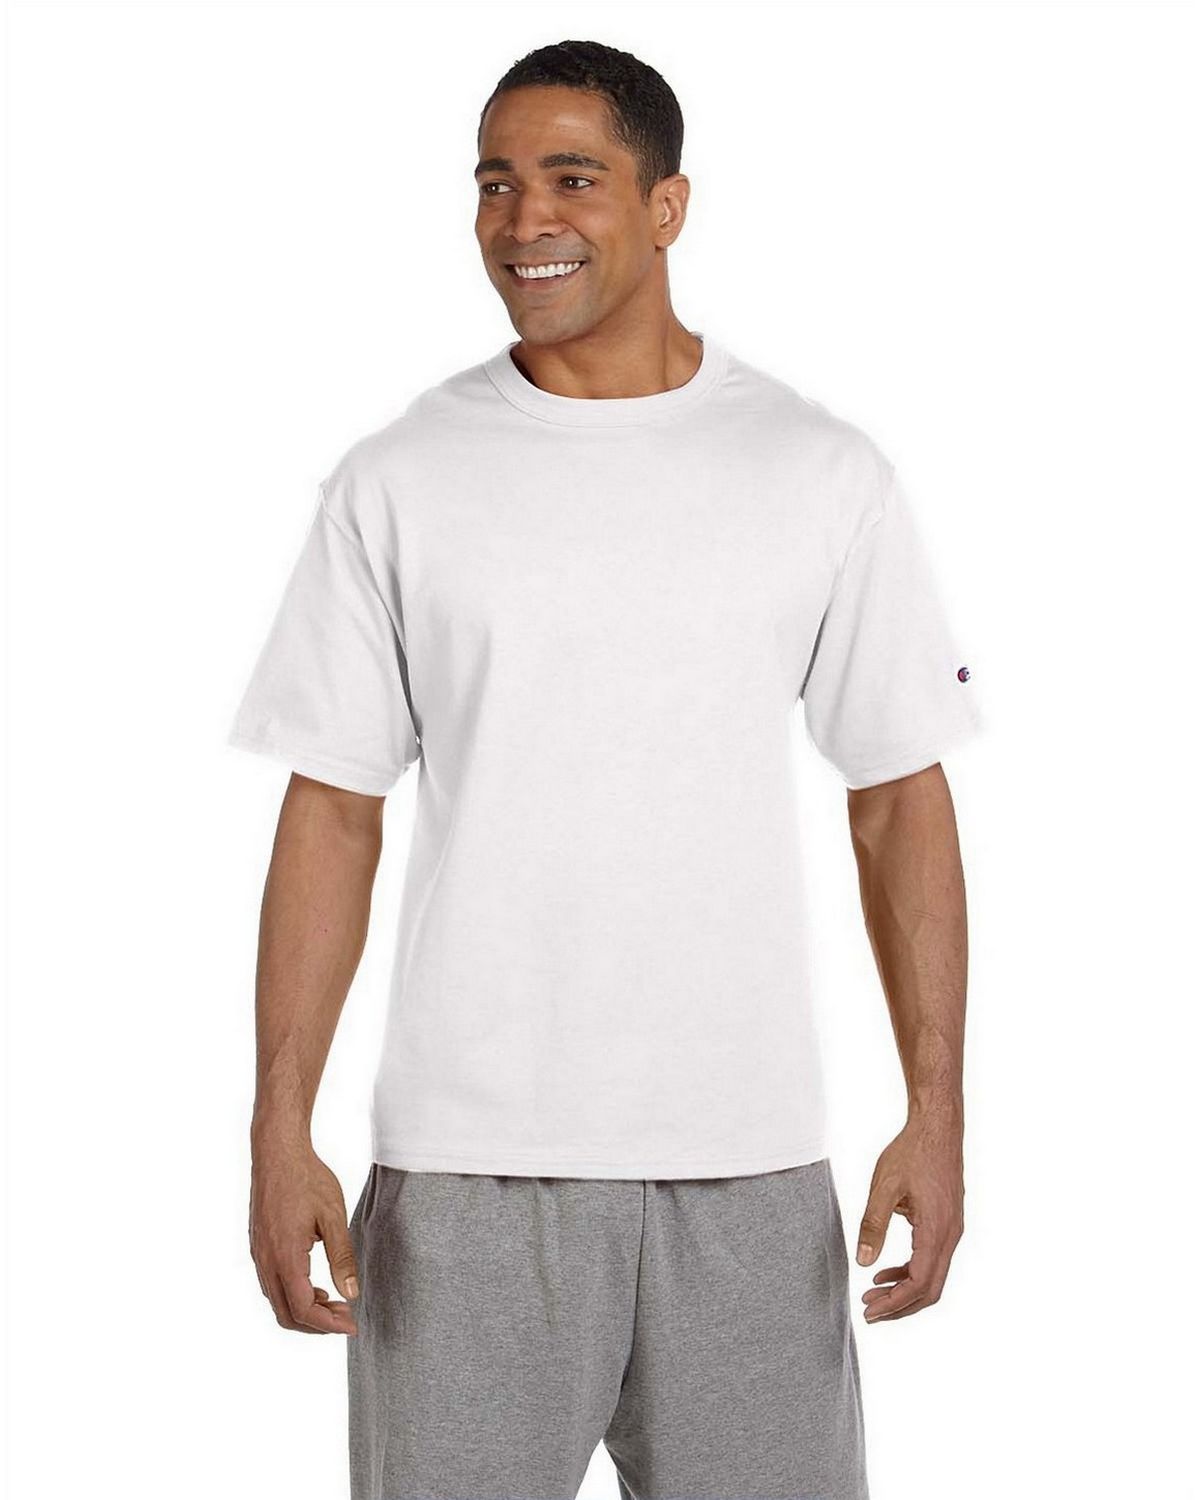 athletic cotton t shirts